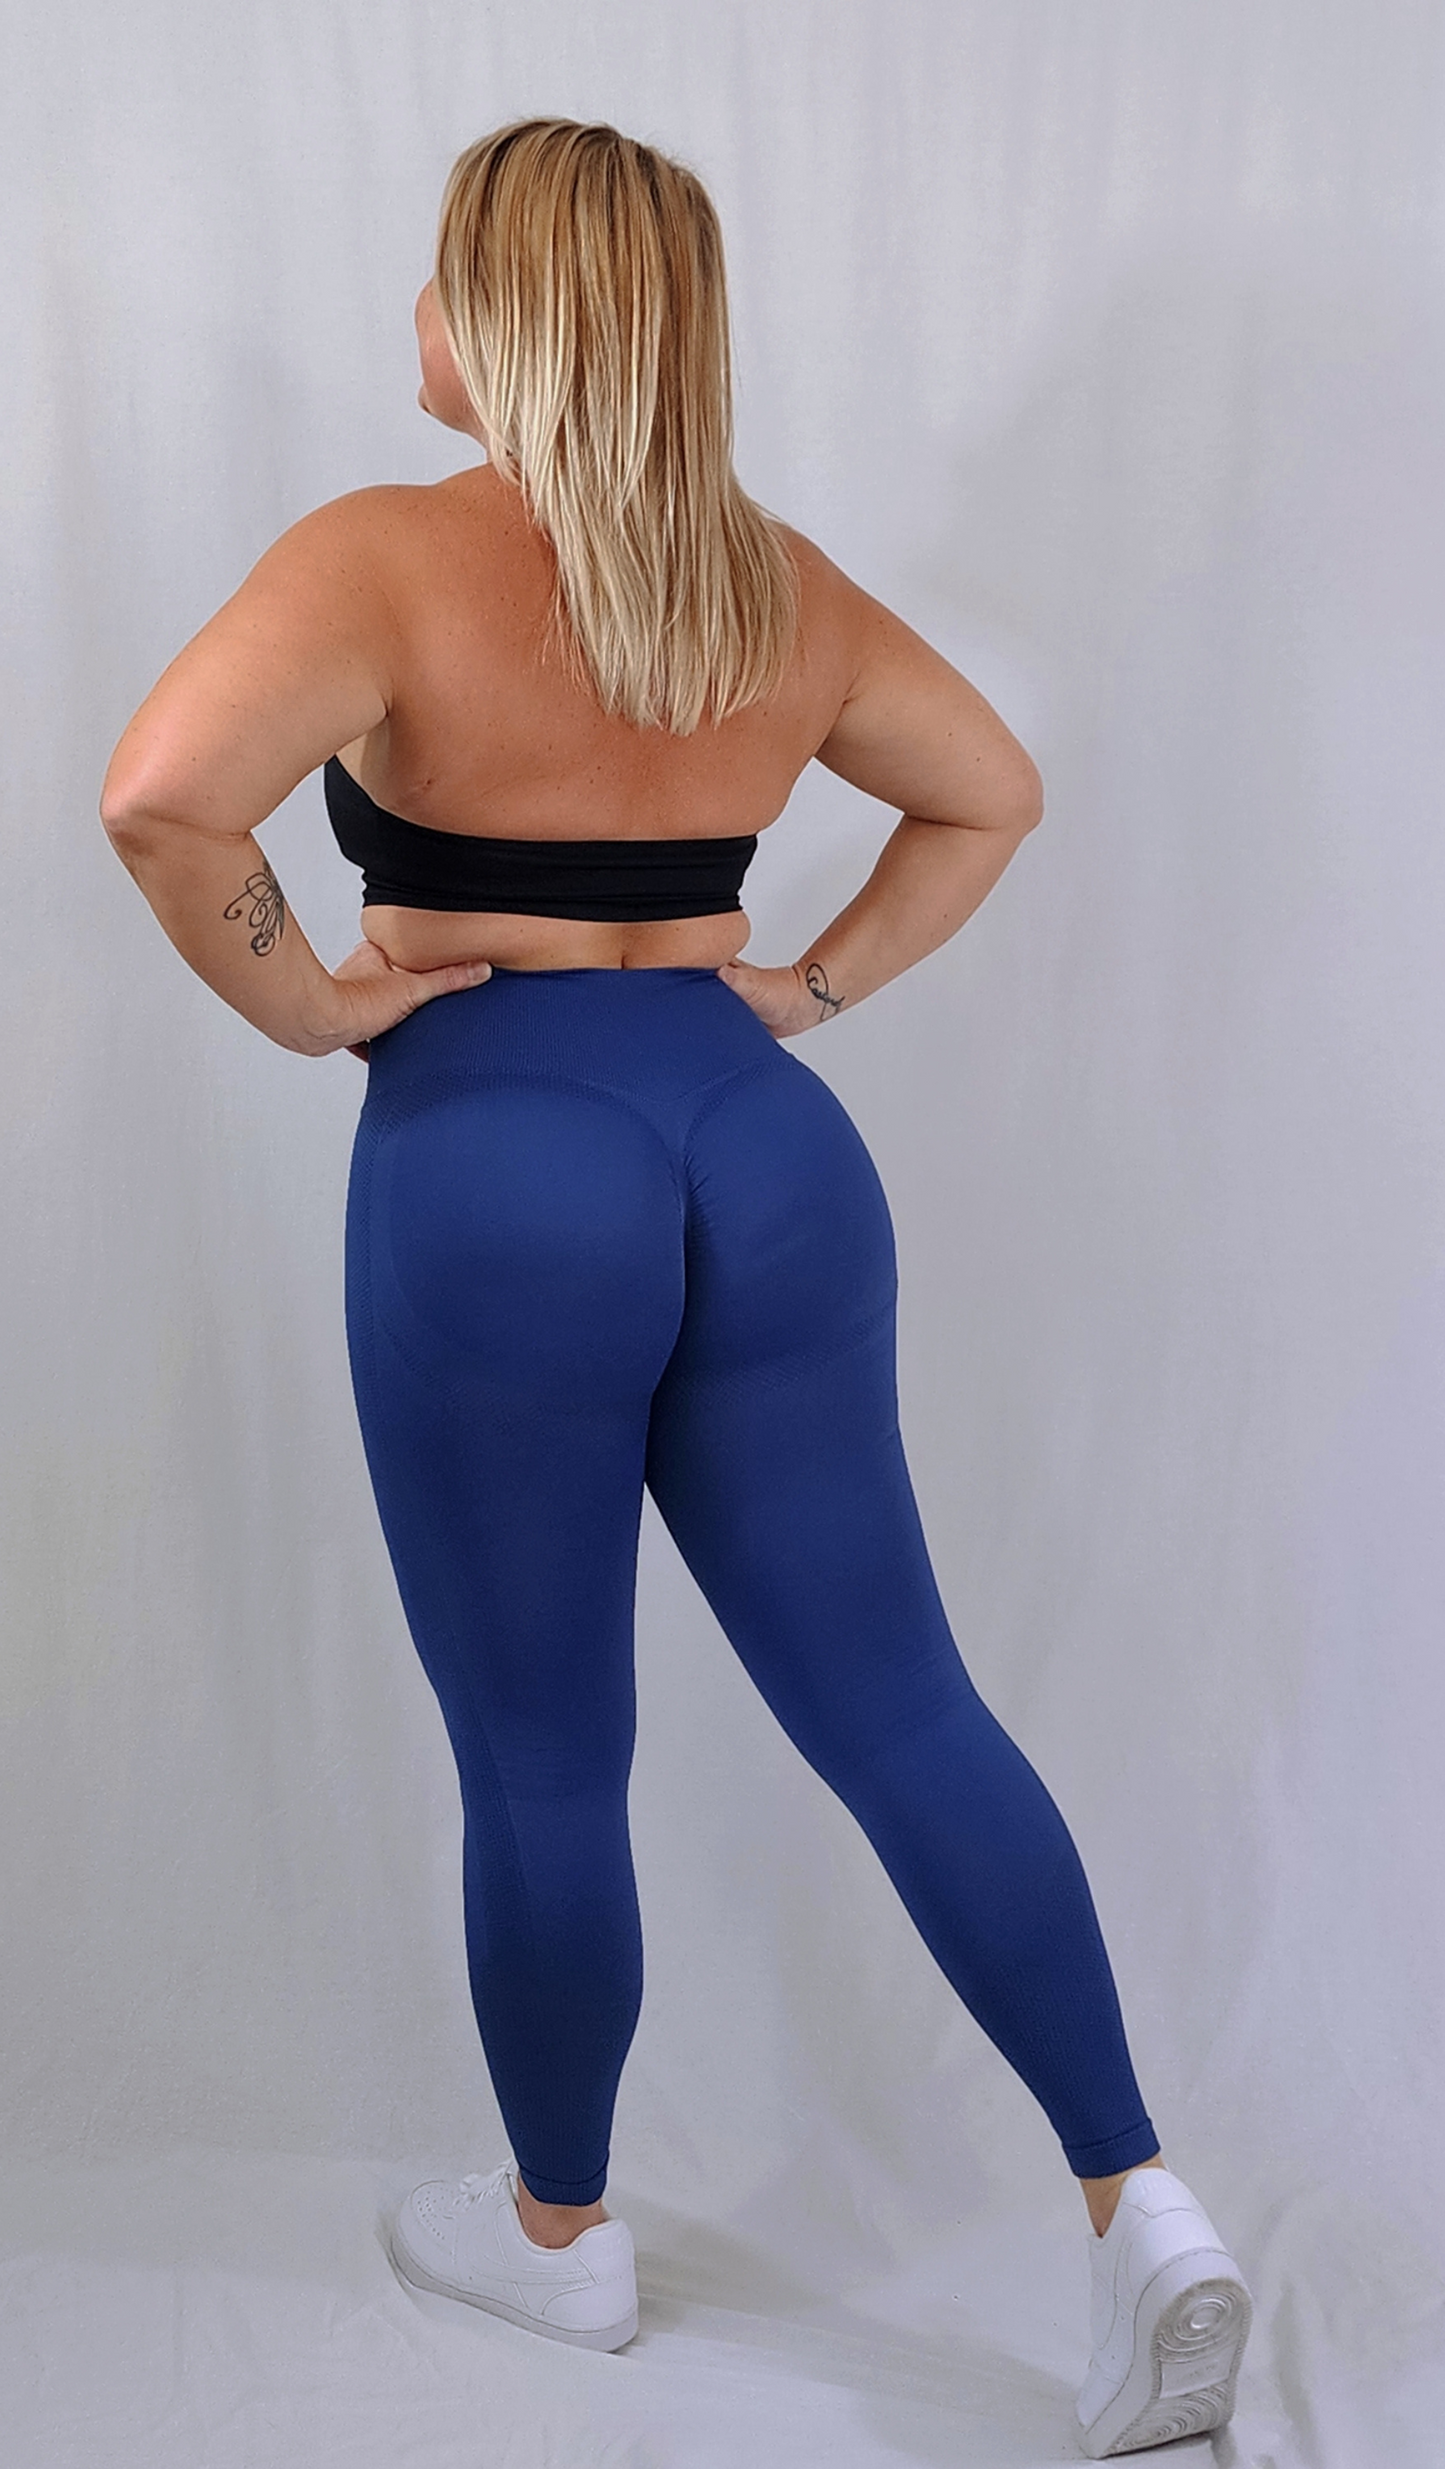 Gym Brand Apparel blue leggings and black halter sports bra back view.